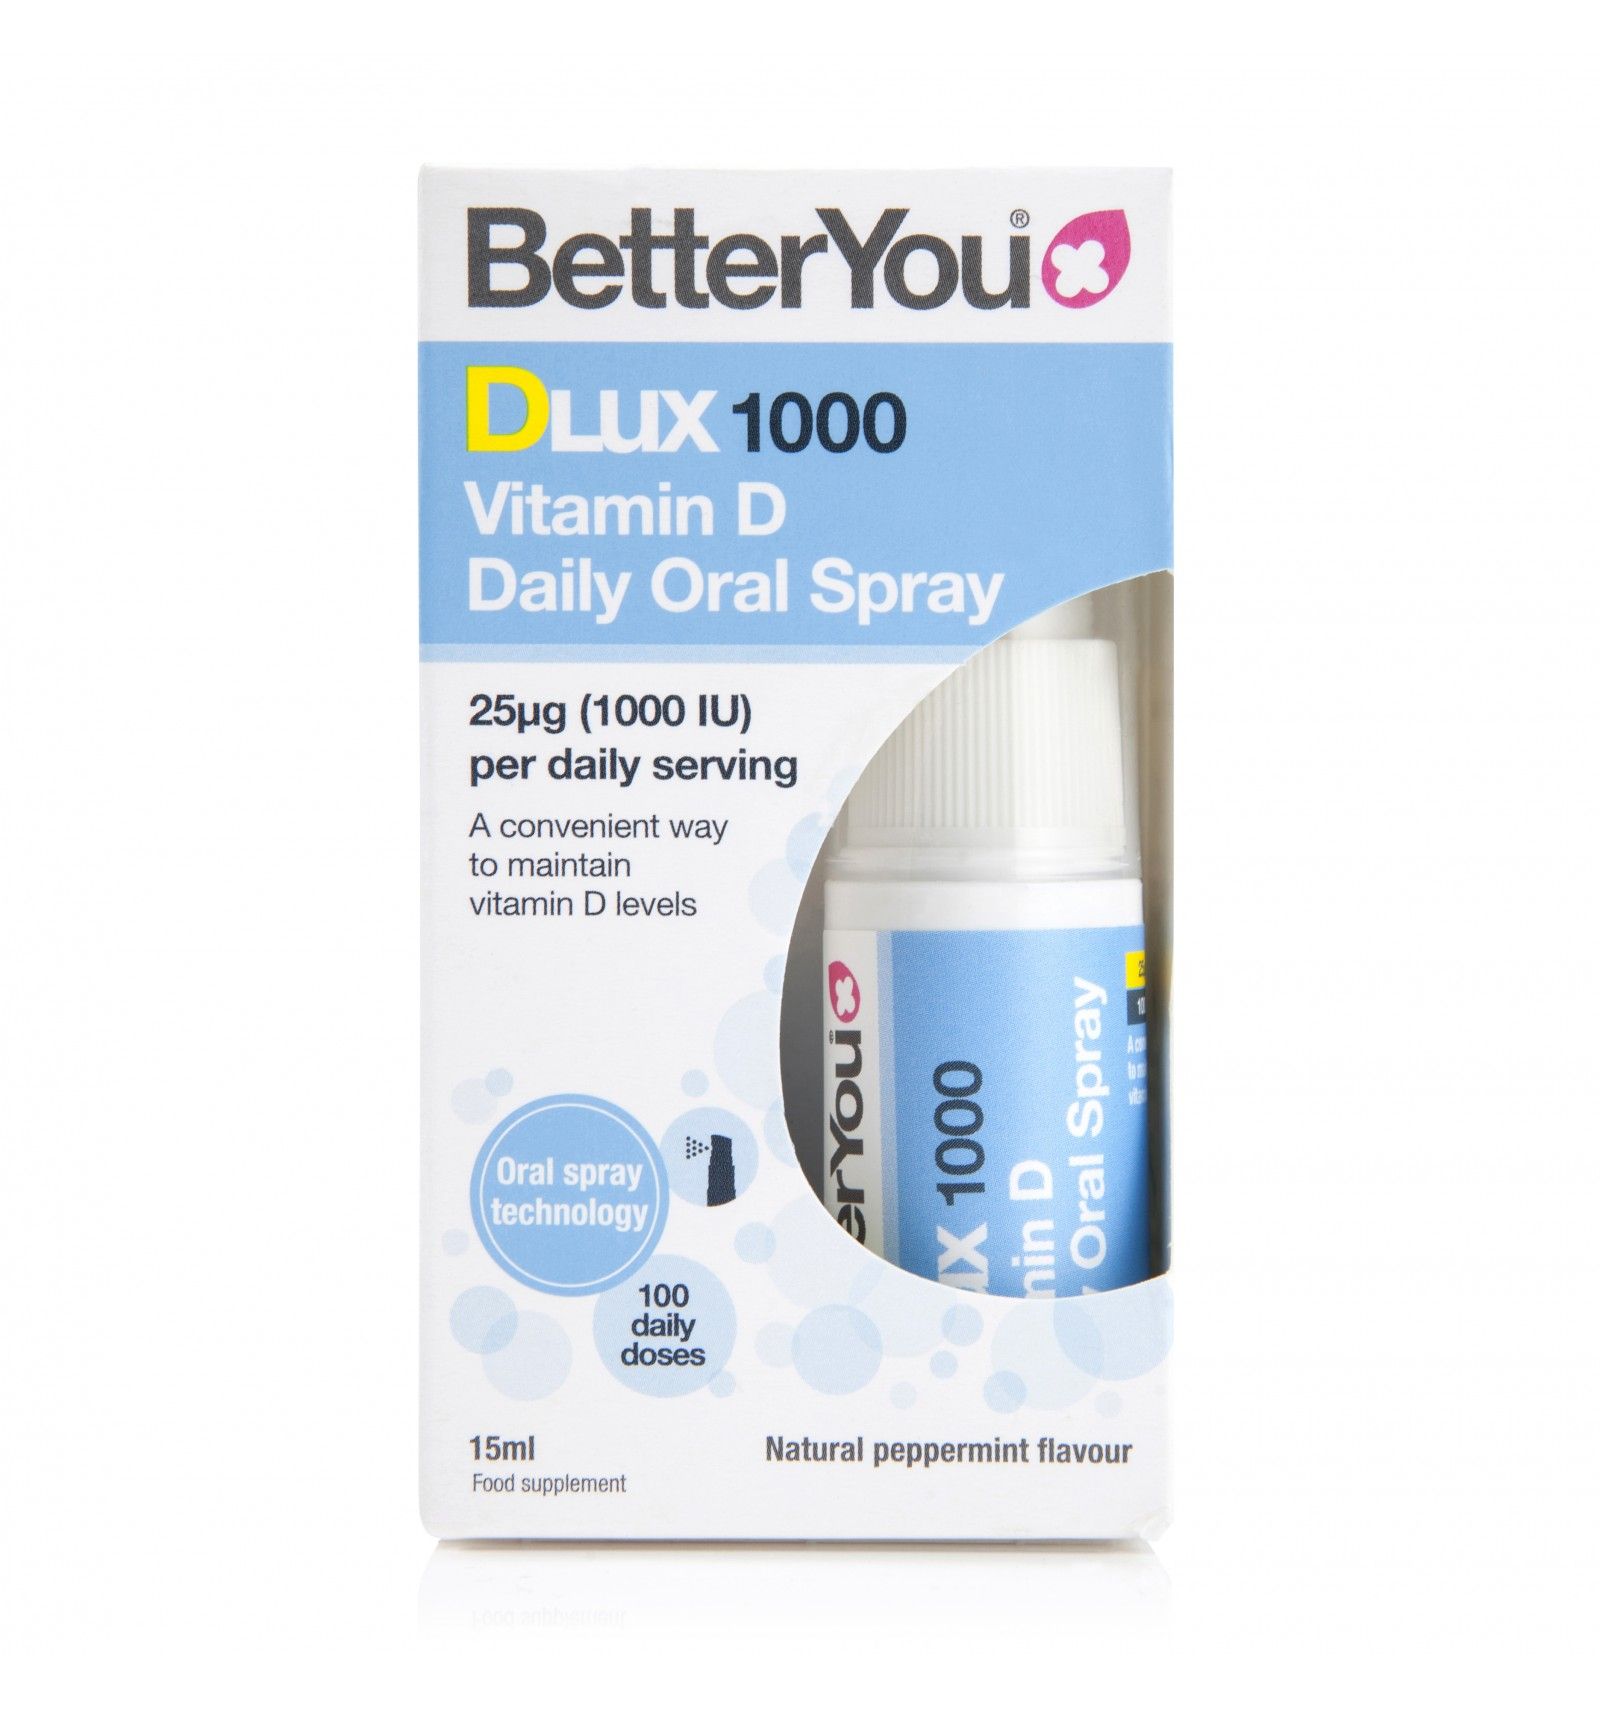 BetterYou DLux 1000 Vitamin D - 15ml Oral Spray